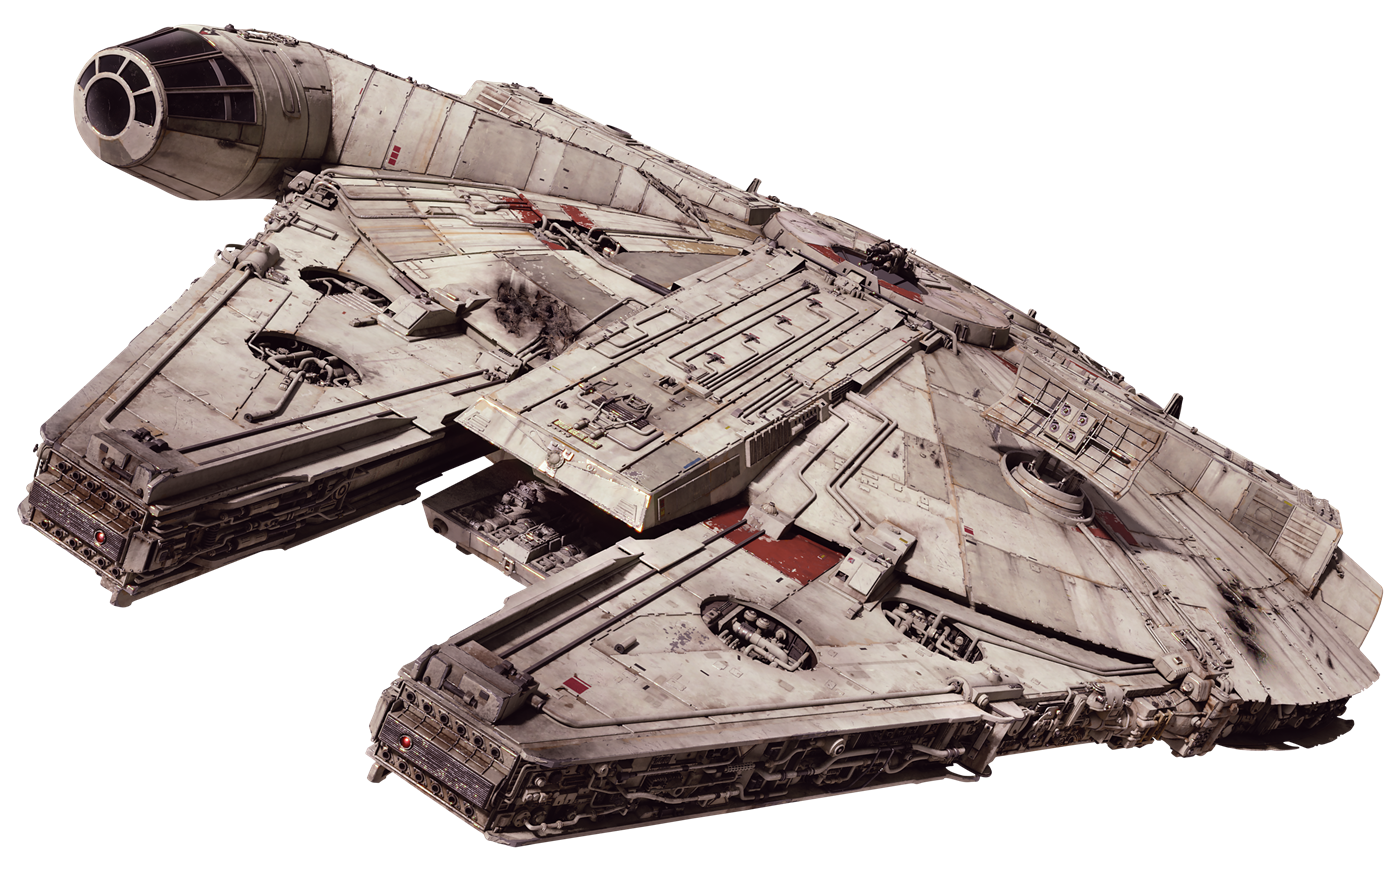 Millennium Falcon Star Wars Descargar imagen PNG Transparente